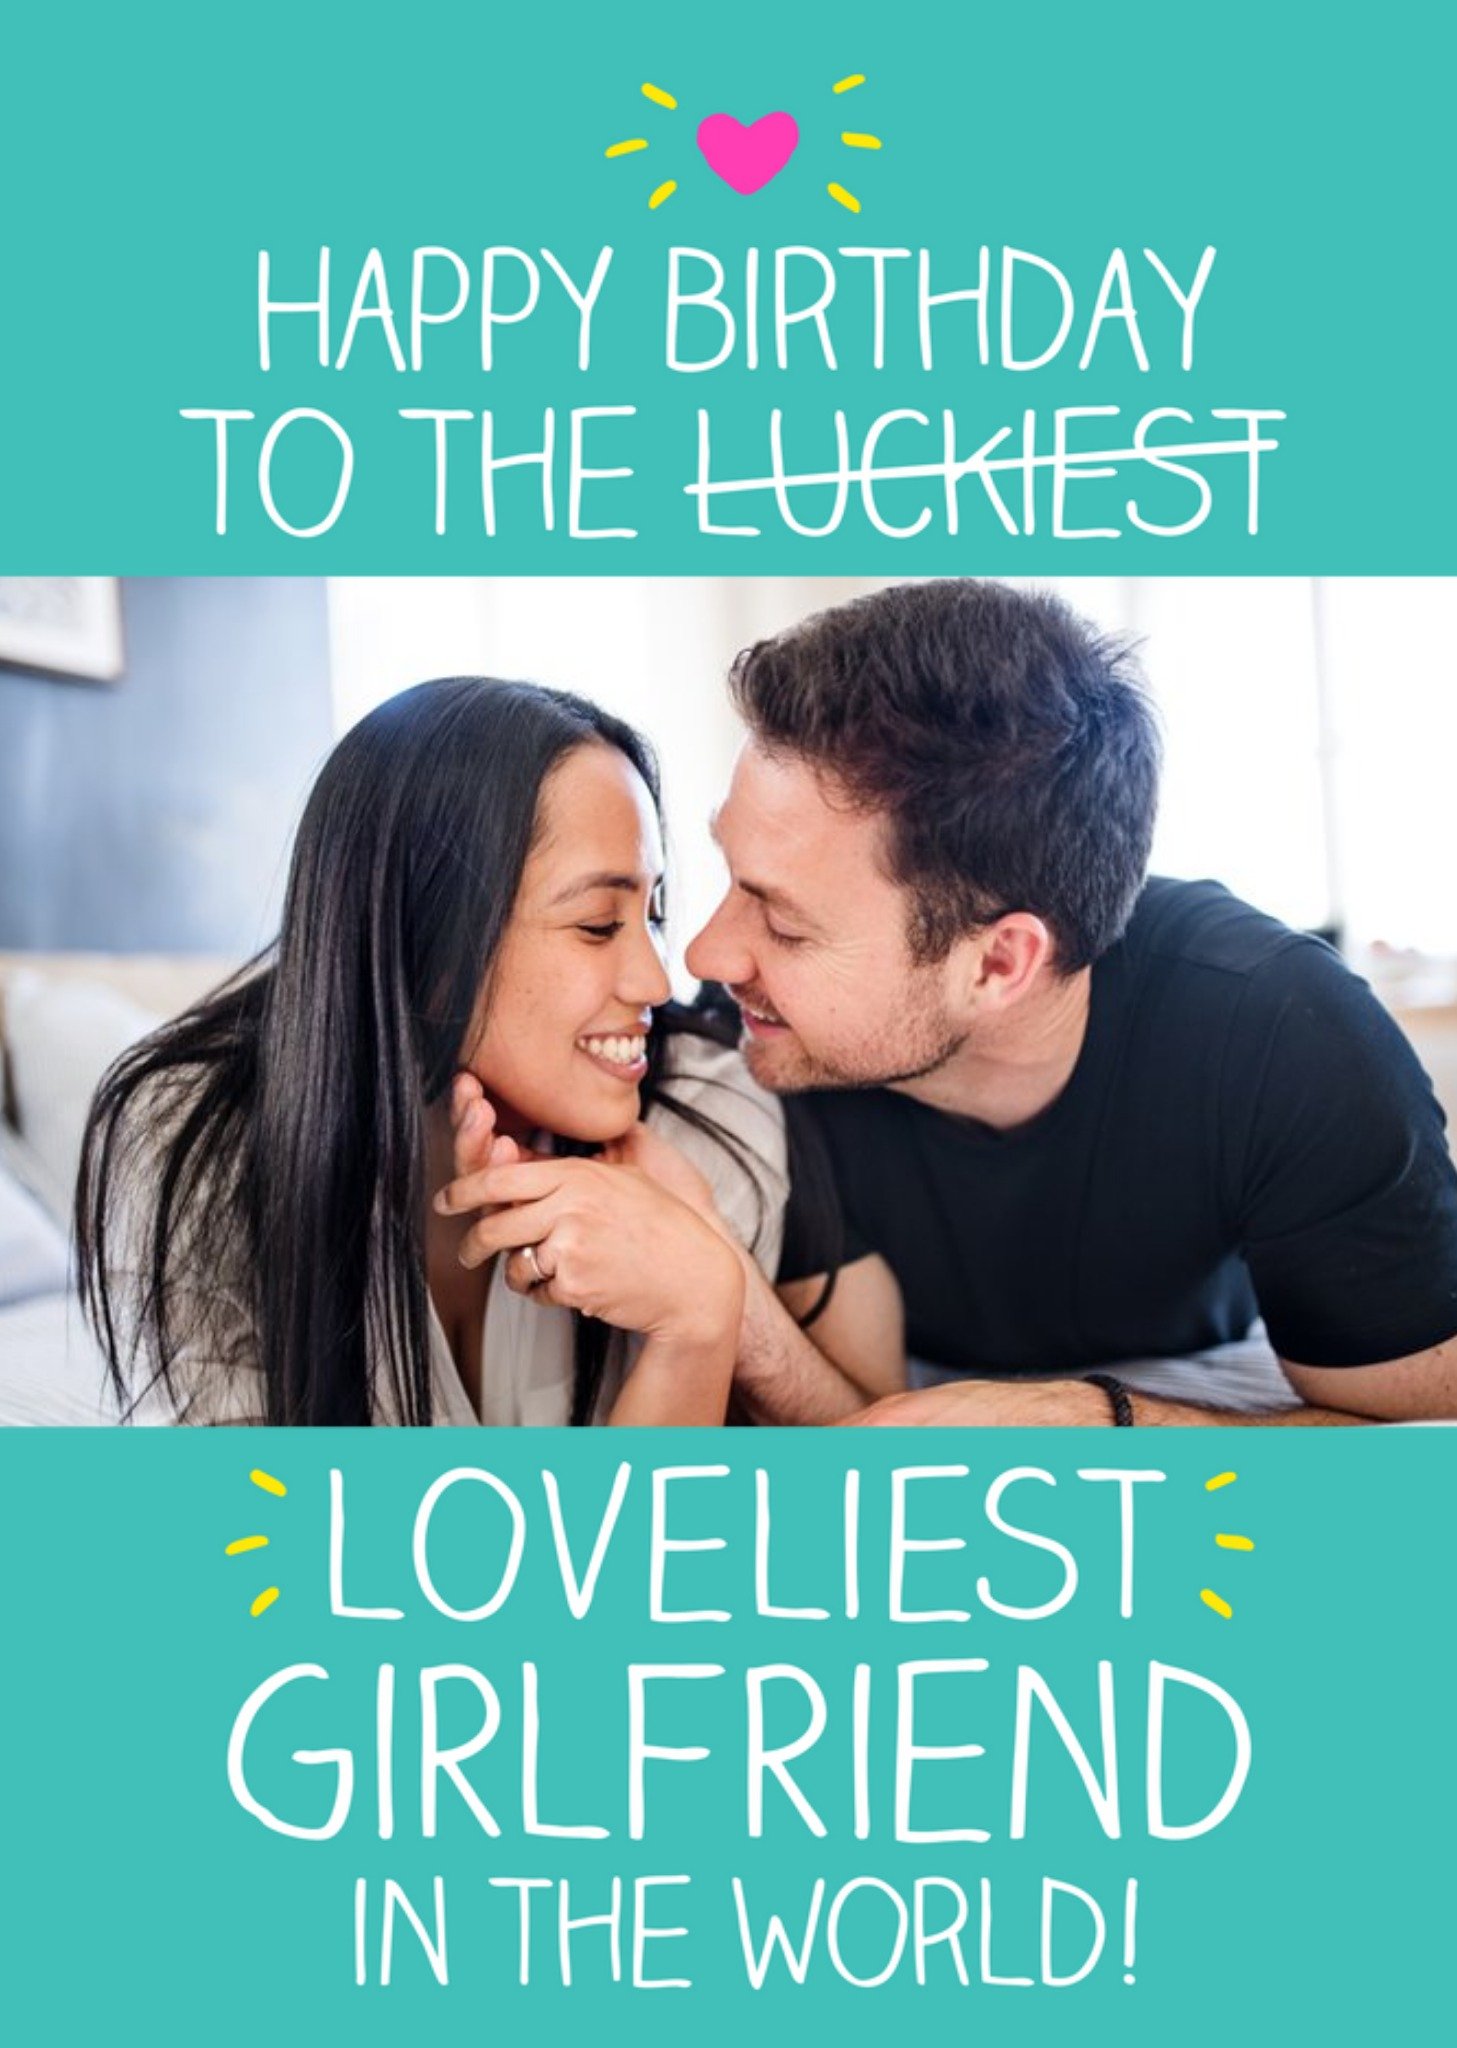 Happy Jackson Luckiest Loveliest Girlfriend In The World Photo Upload Birthday Card Ecard